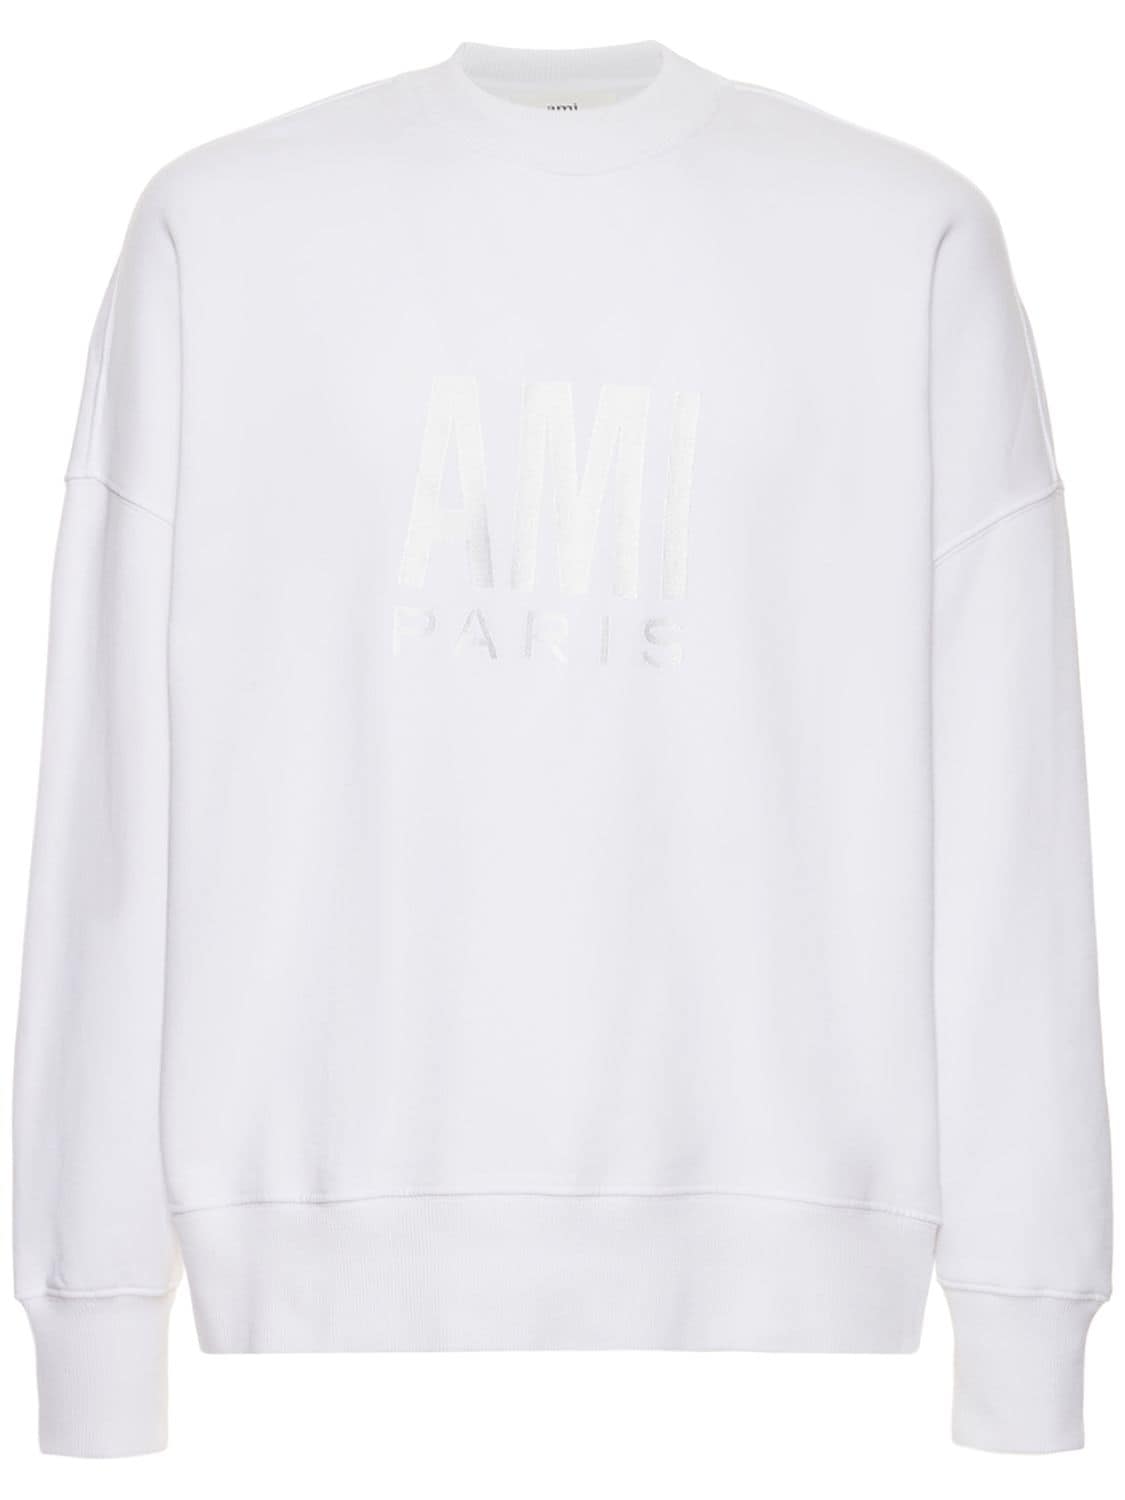 AMI PARIS Logo Cotton Jersey Sweatshirt